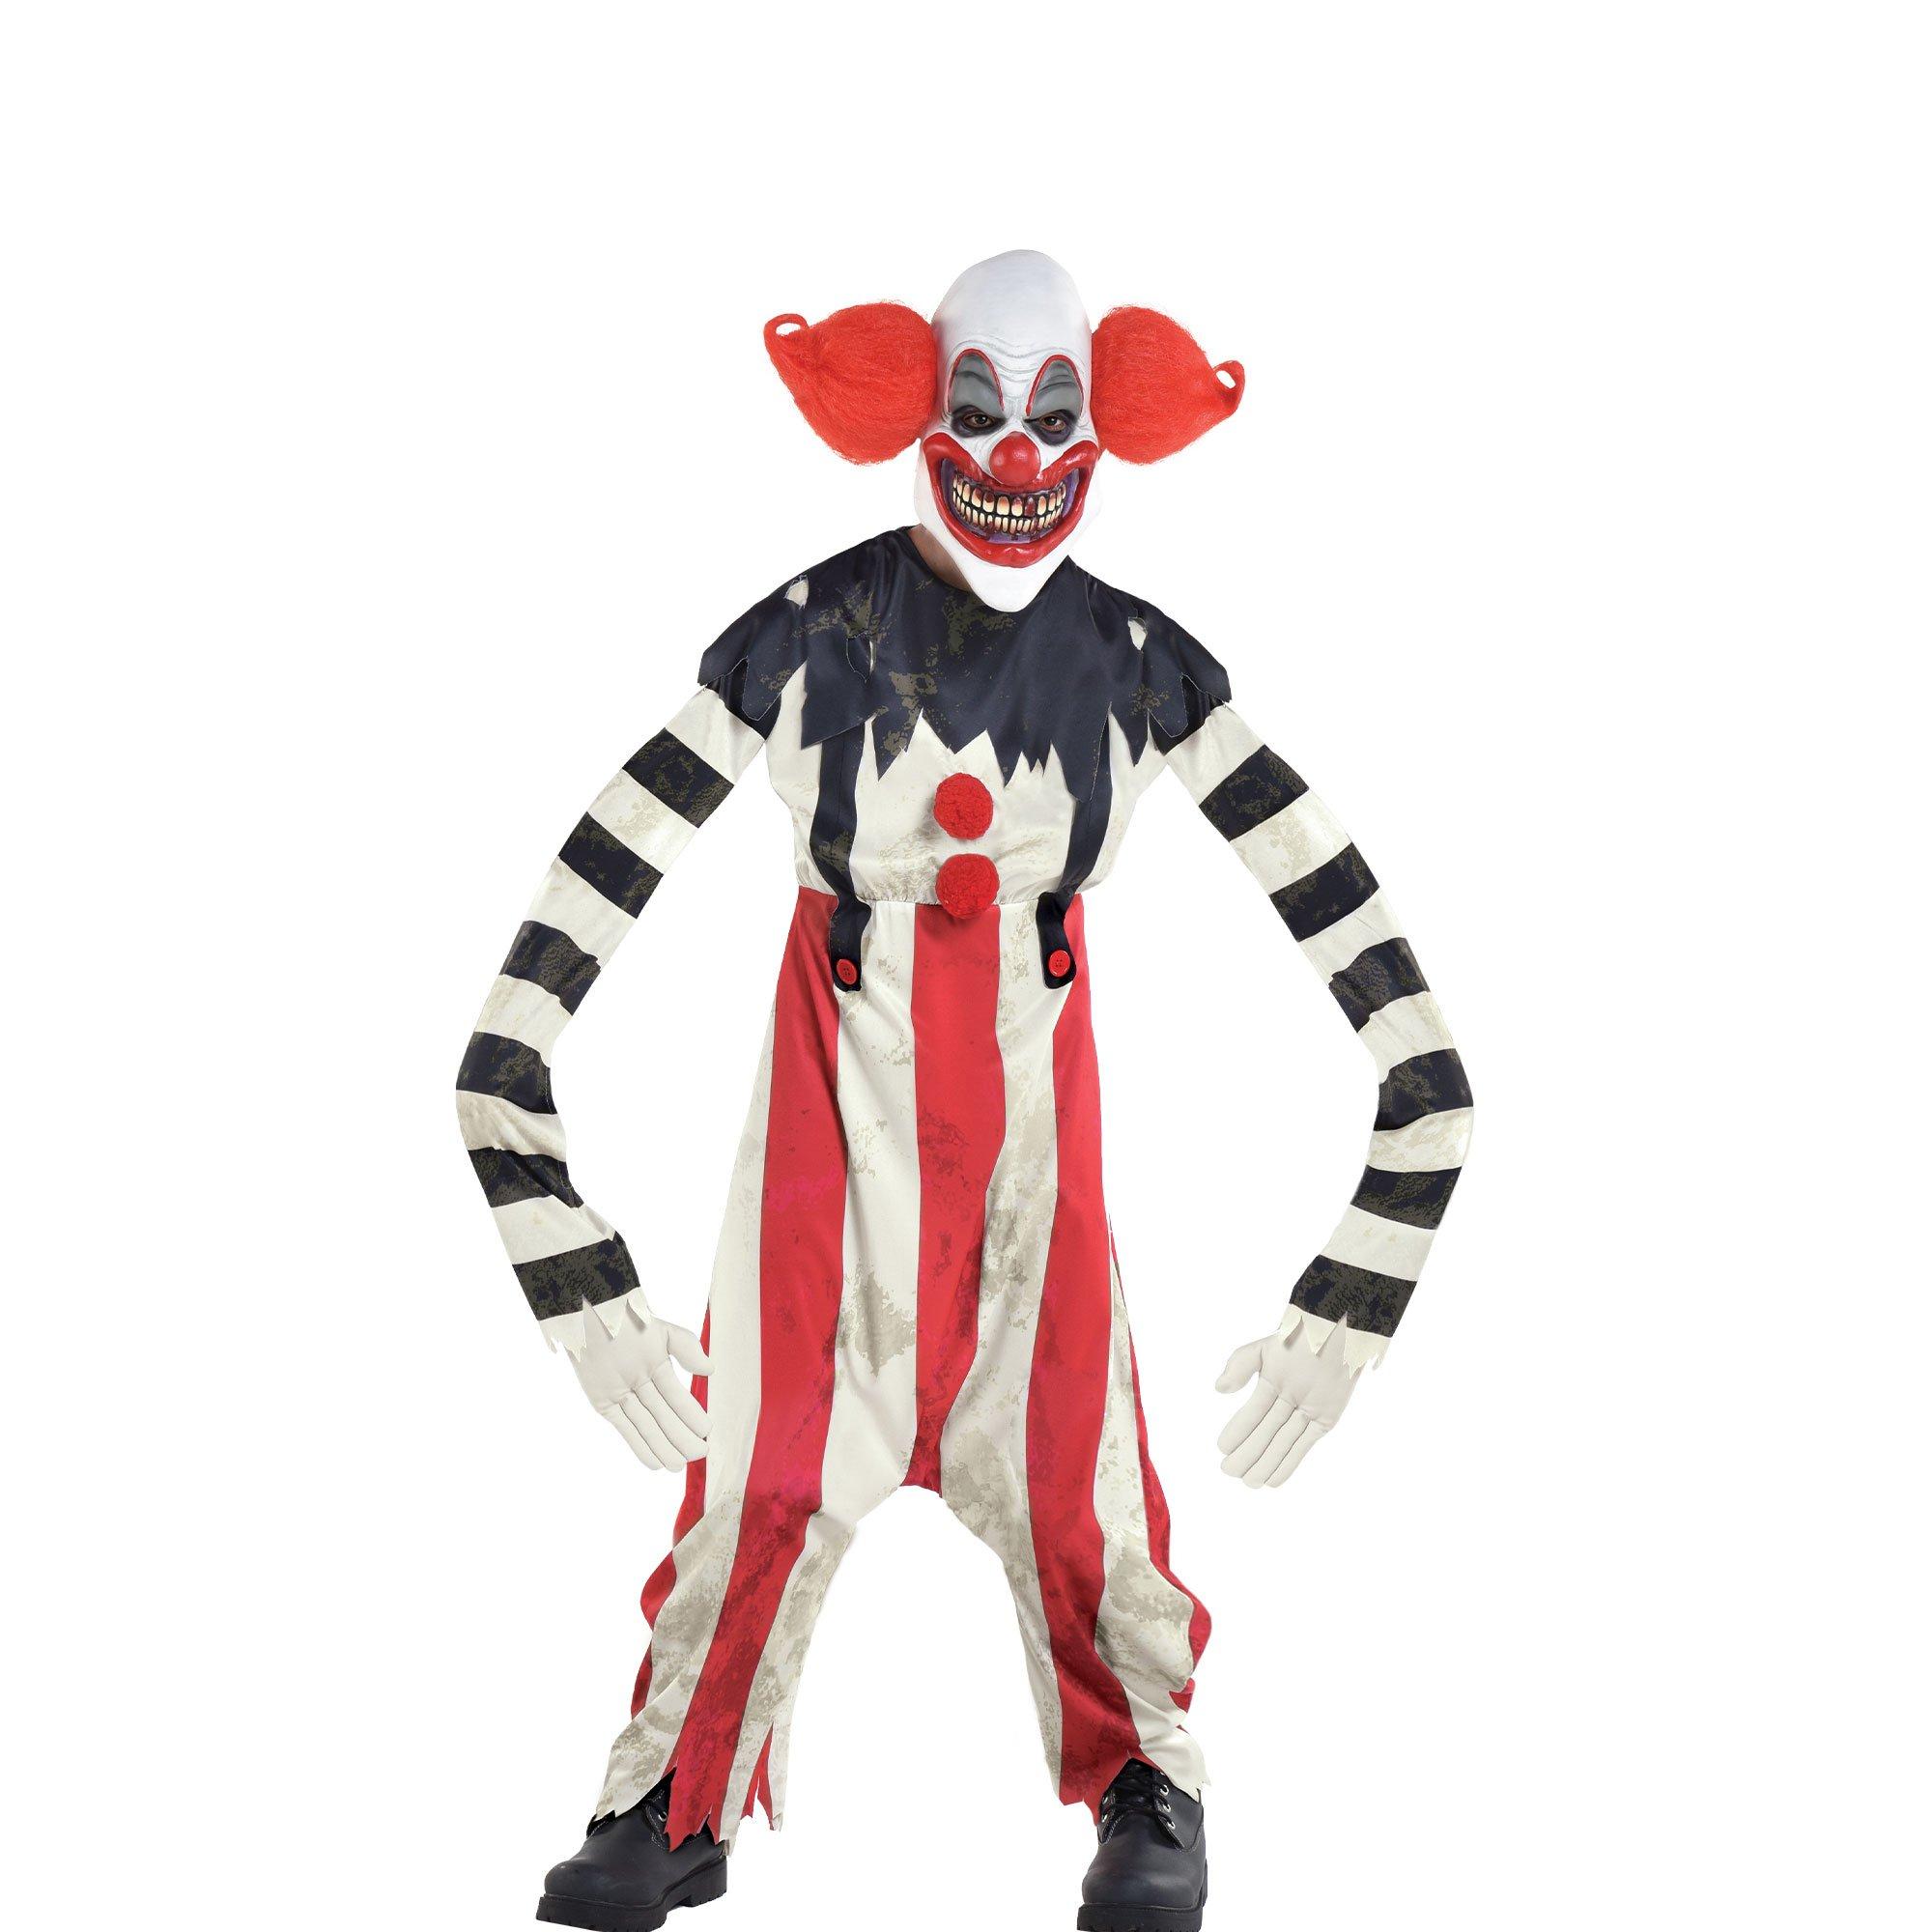 Killer Clown Costume for Pets